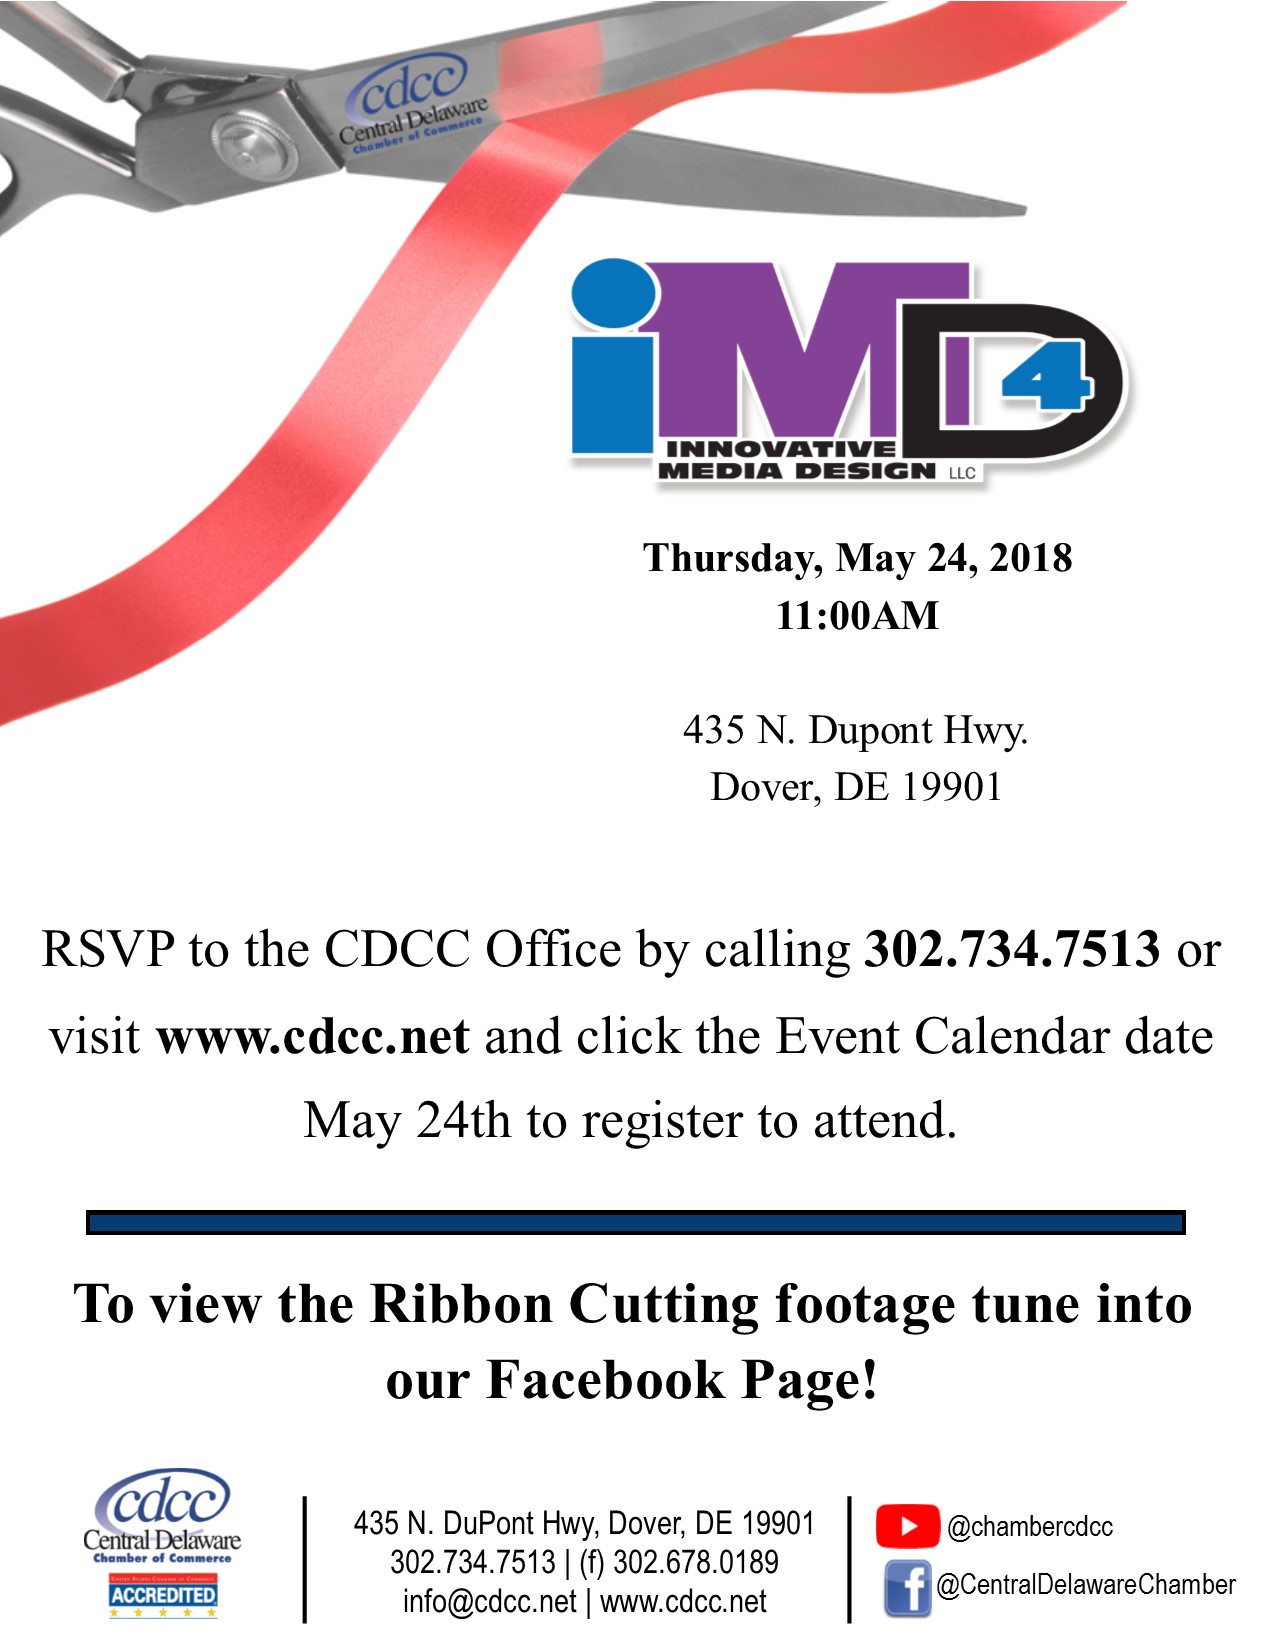 Ribbon Cutting - iMD4 Innovative Media Design LLC